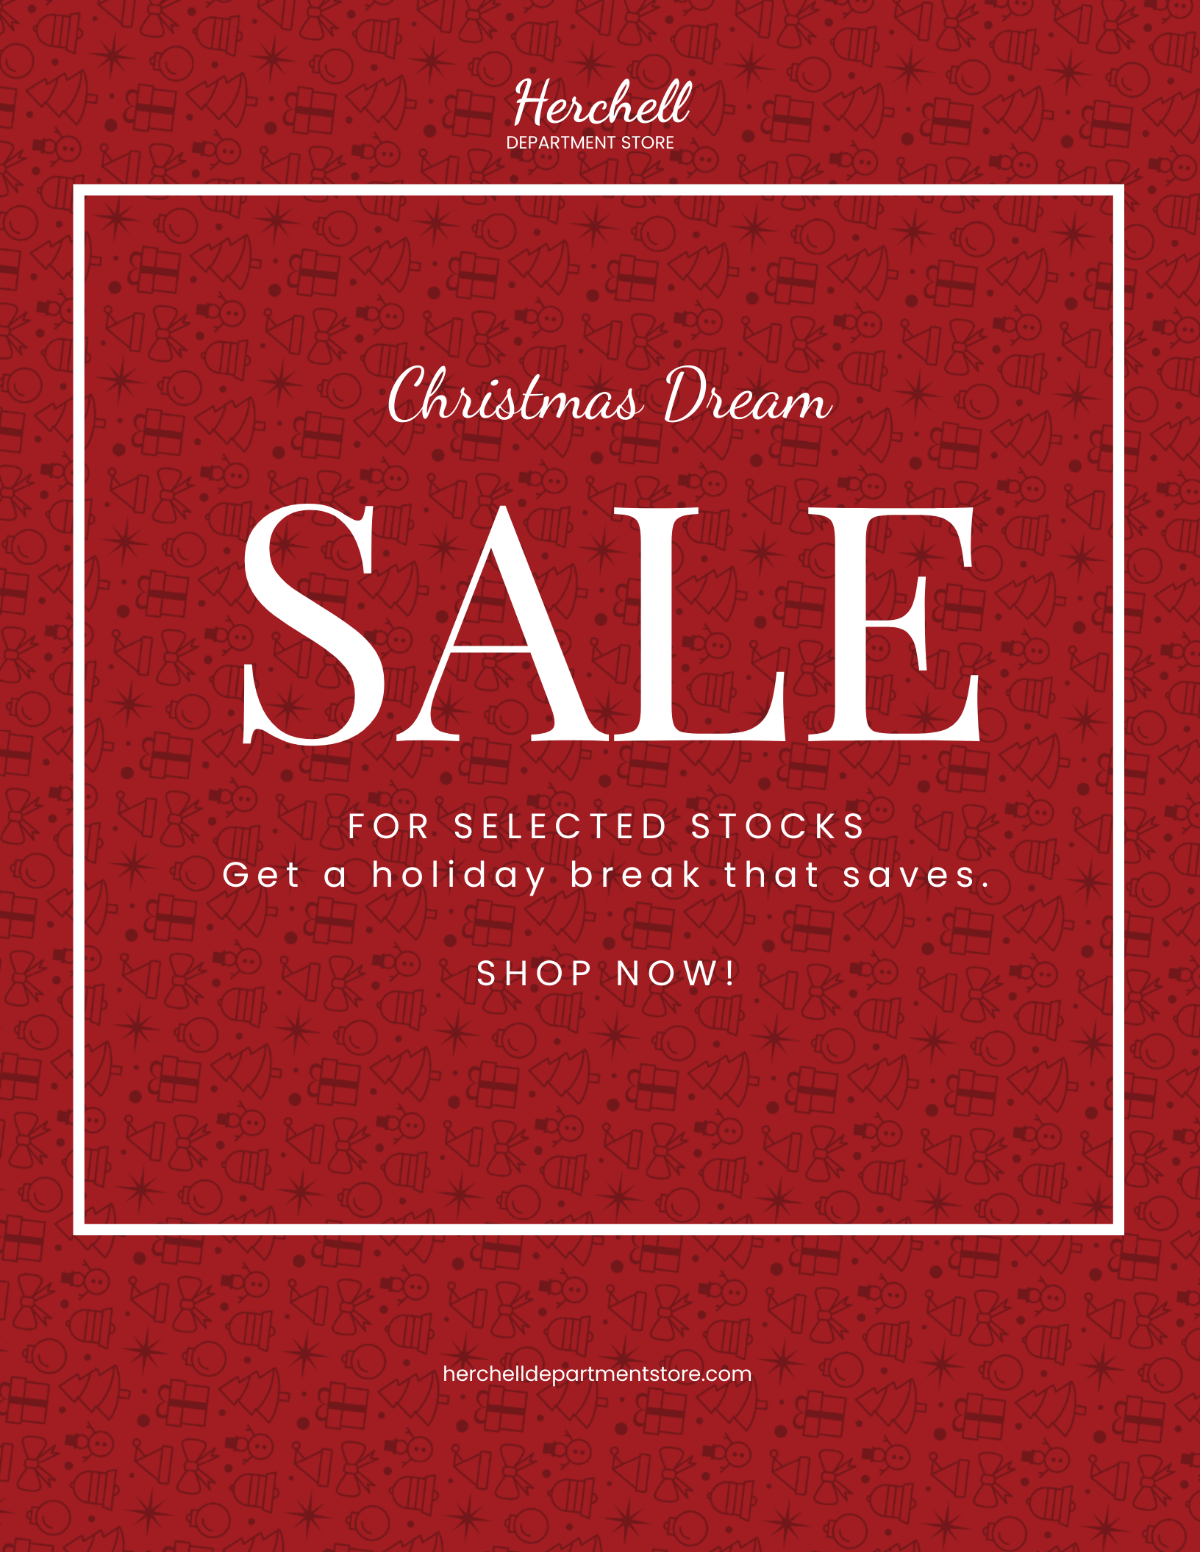 Christmas Dreams Sale Flyer